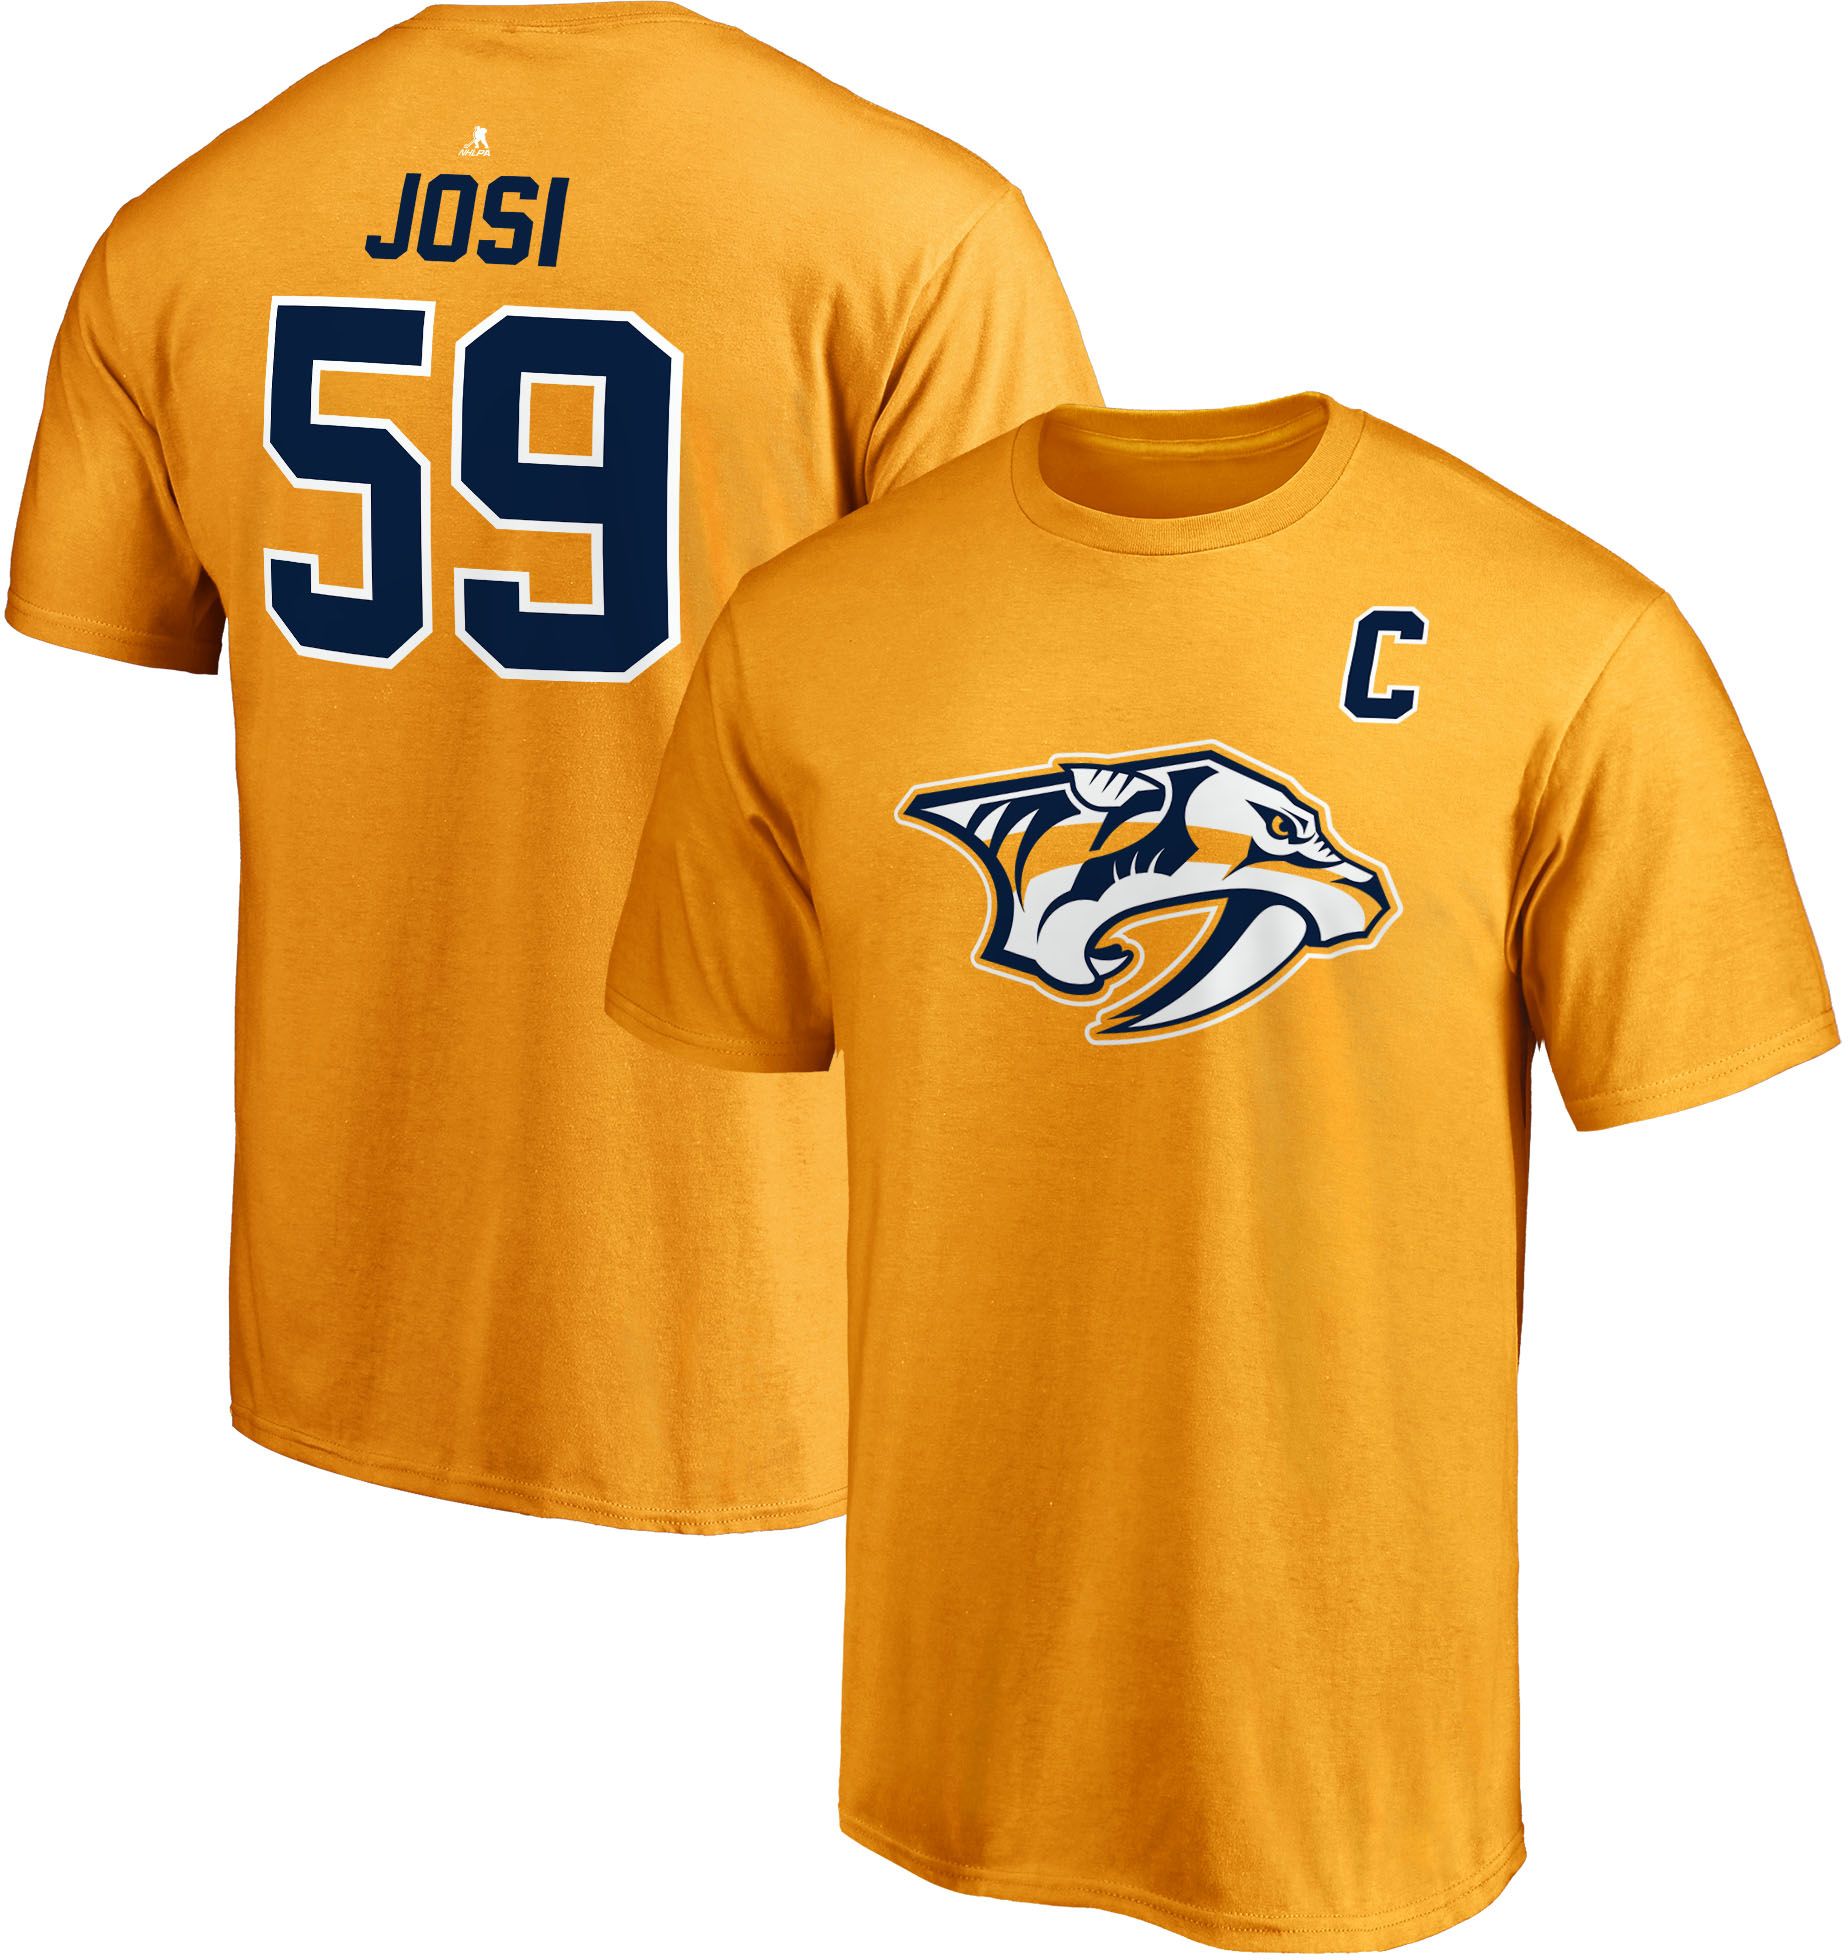 Roman Josi #59 Gold Player T-Shirt 